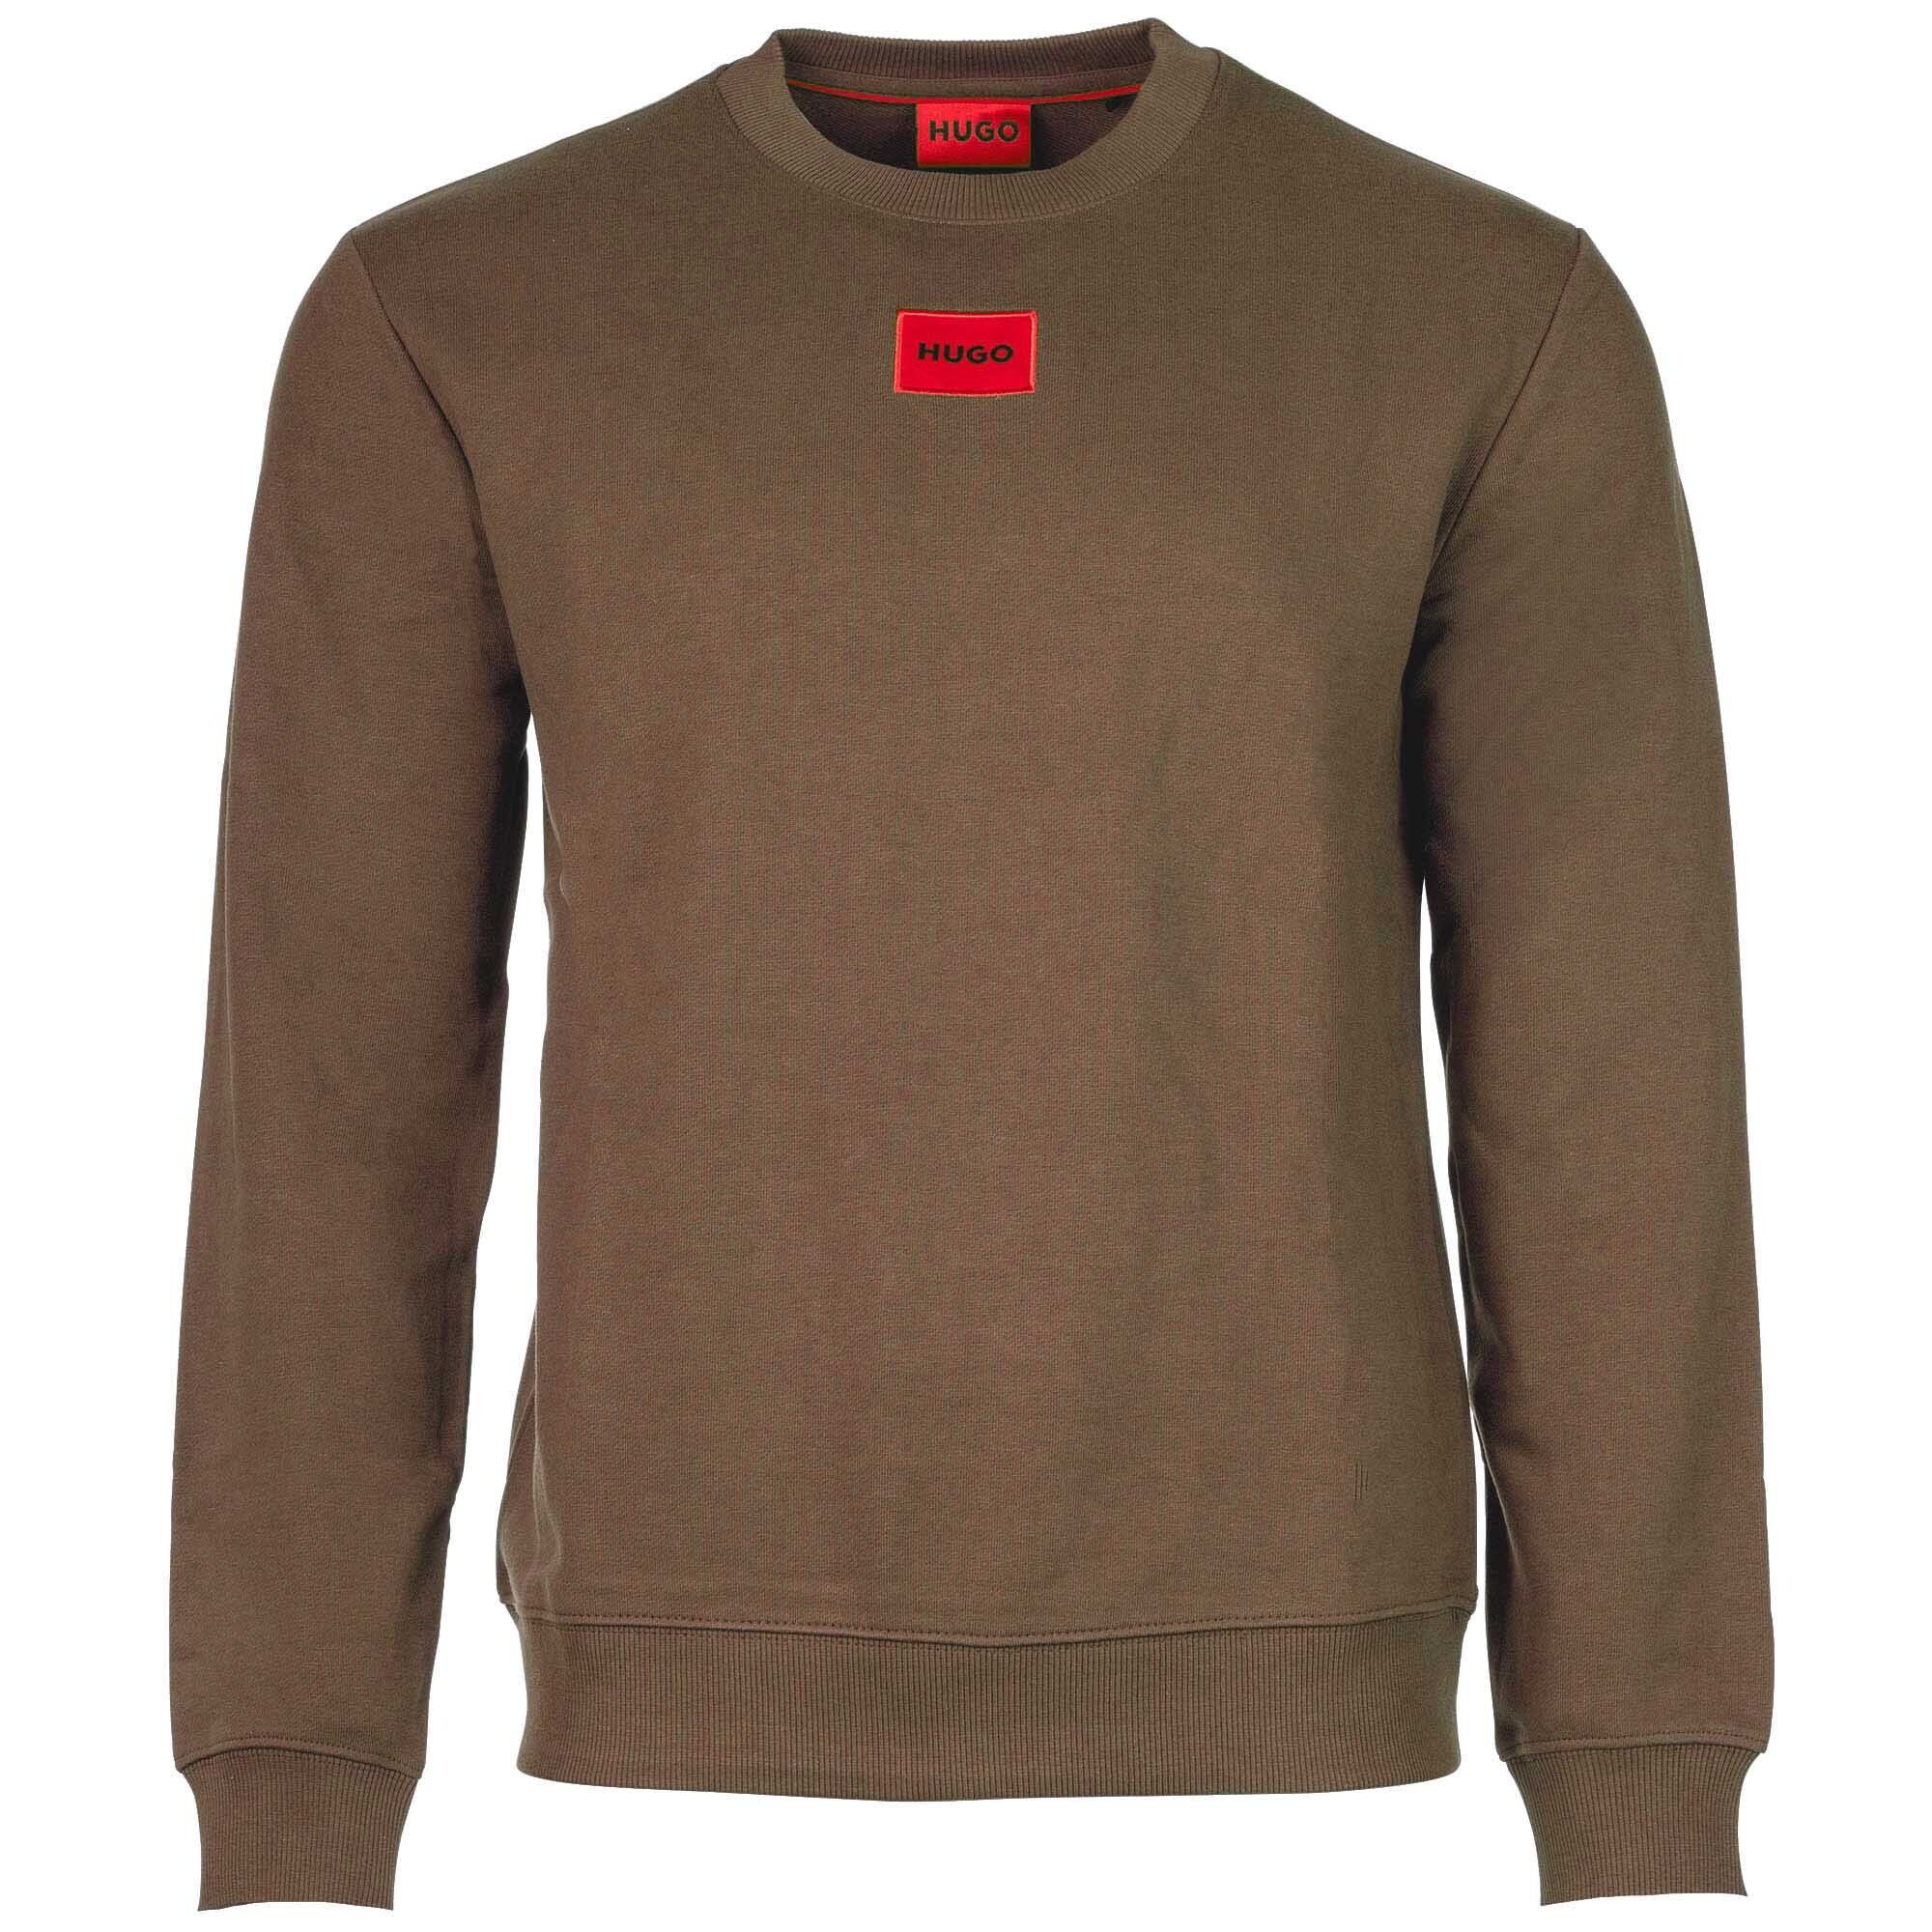 HUGO Sweatshirt Herren Sweater, Diragol212 - Sweatshirt, Rundhals Braun